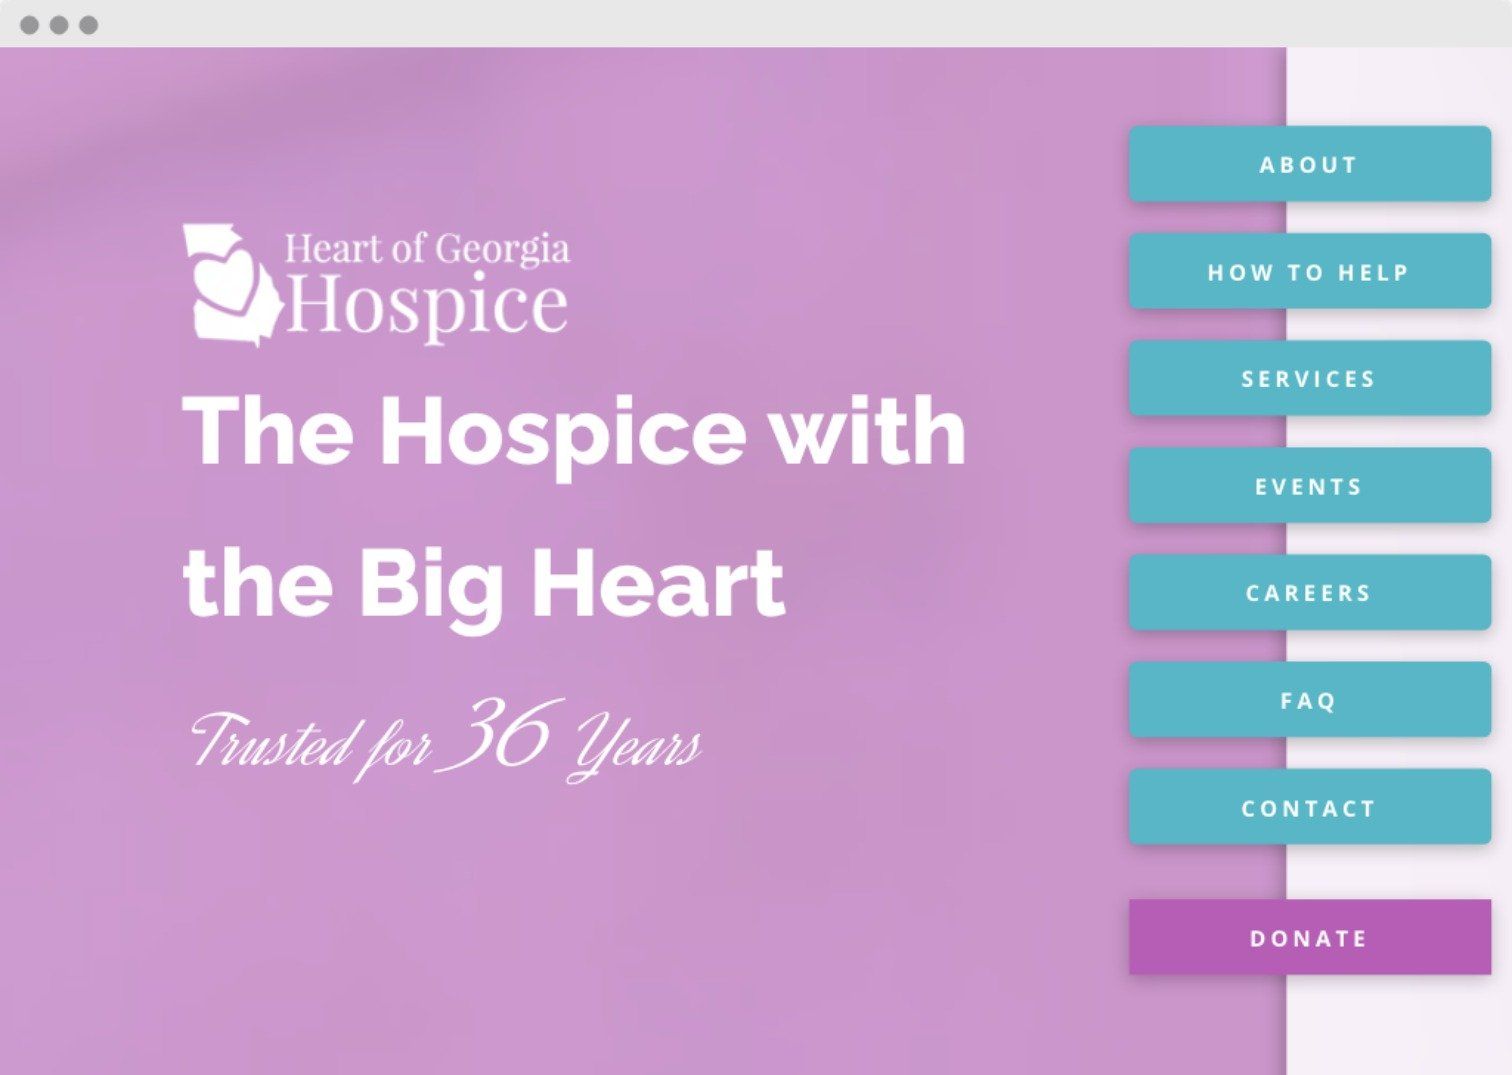 Heart of Georgia Hospice